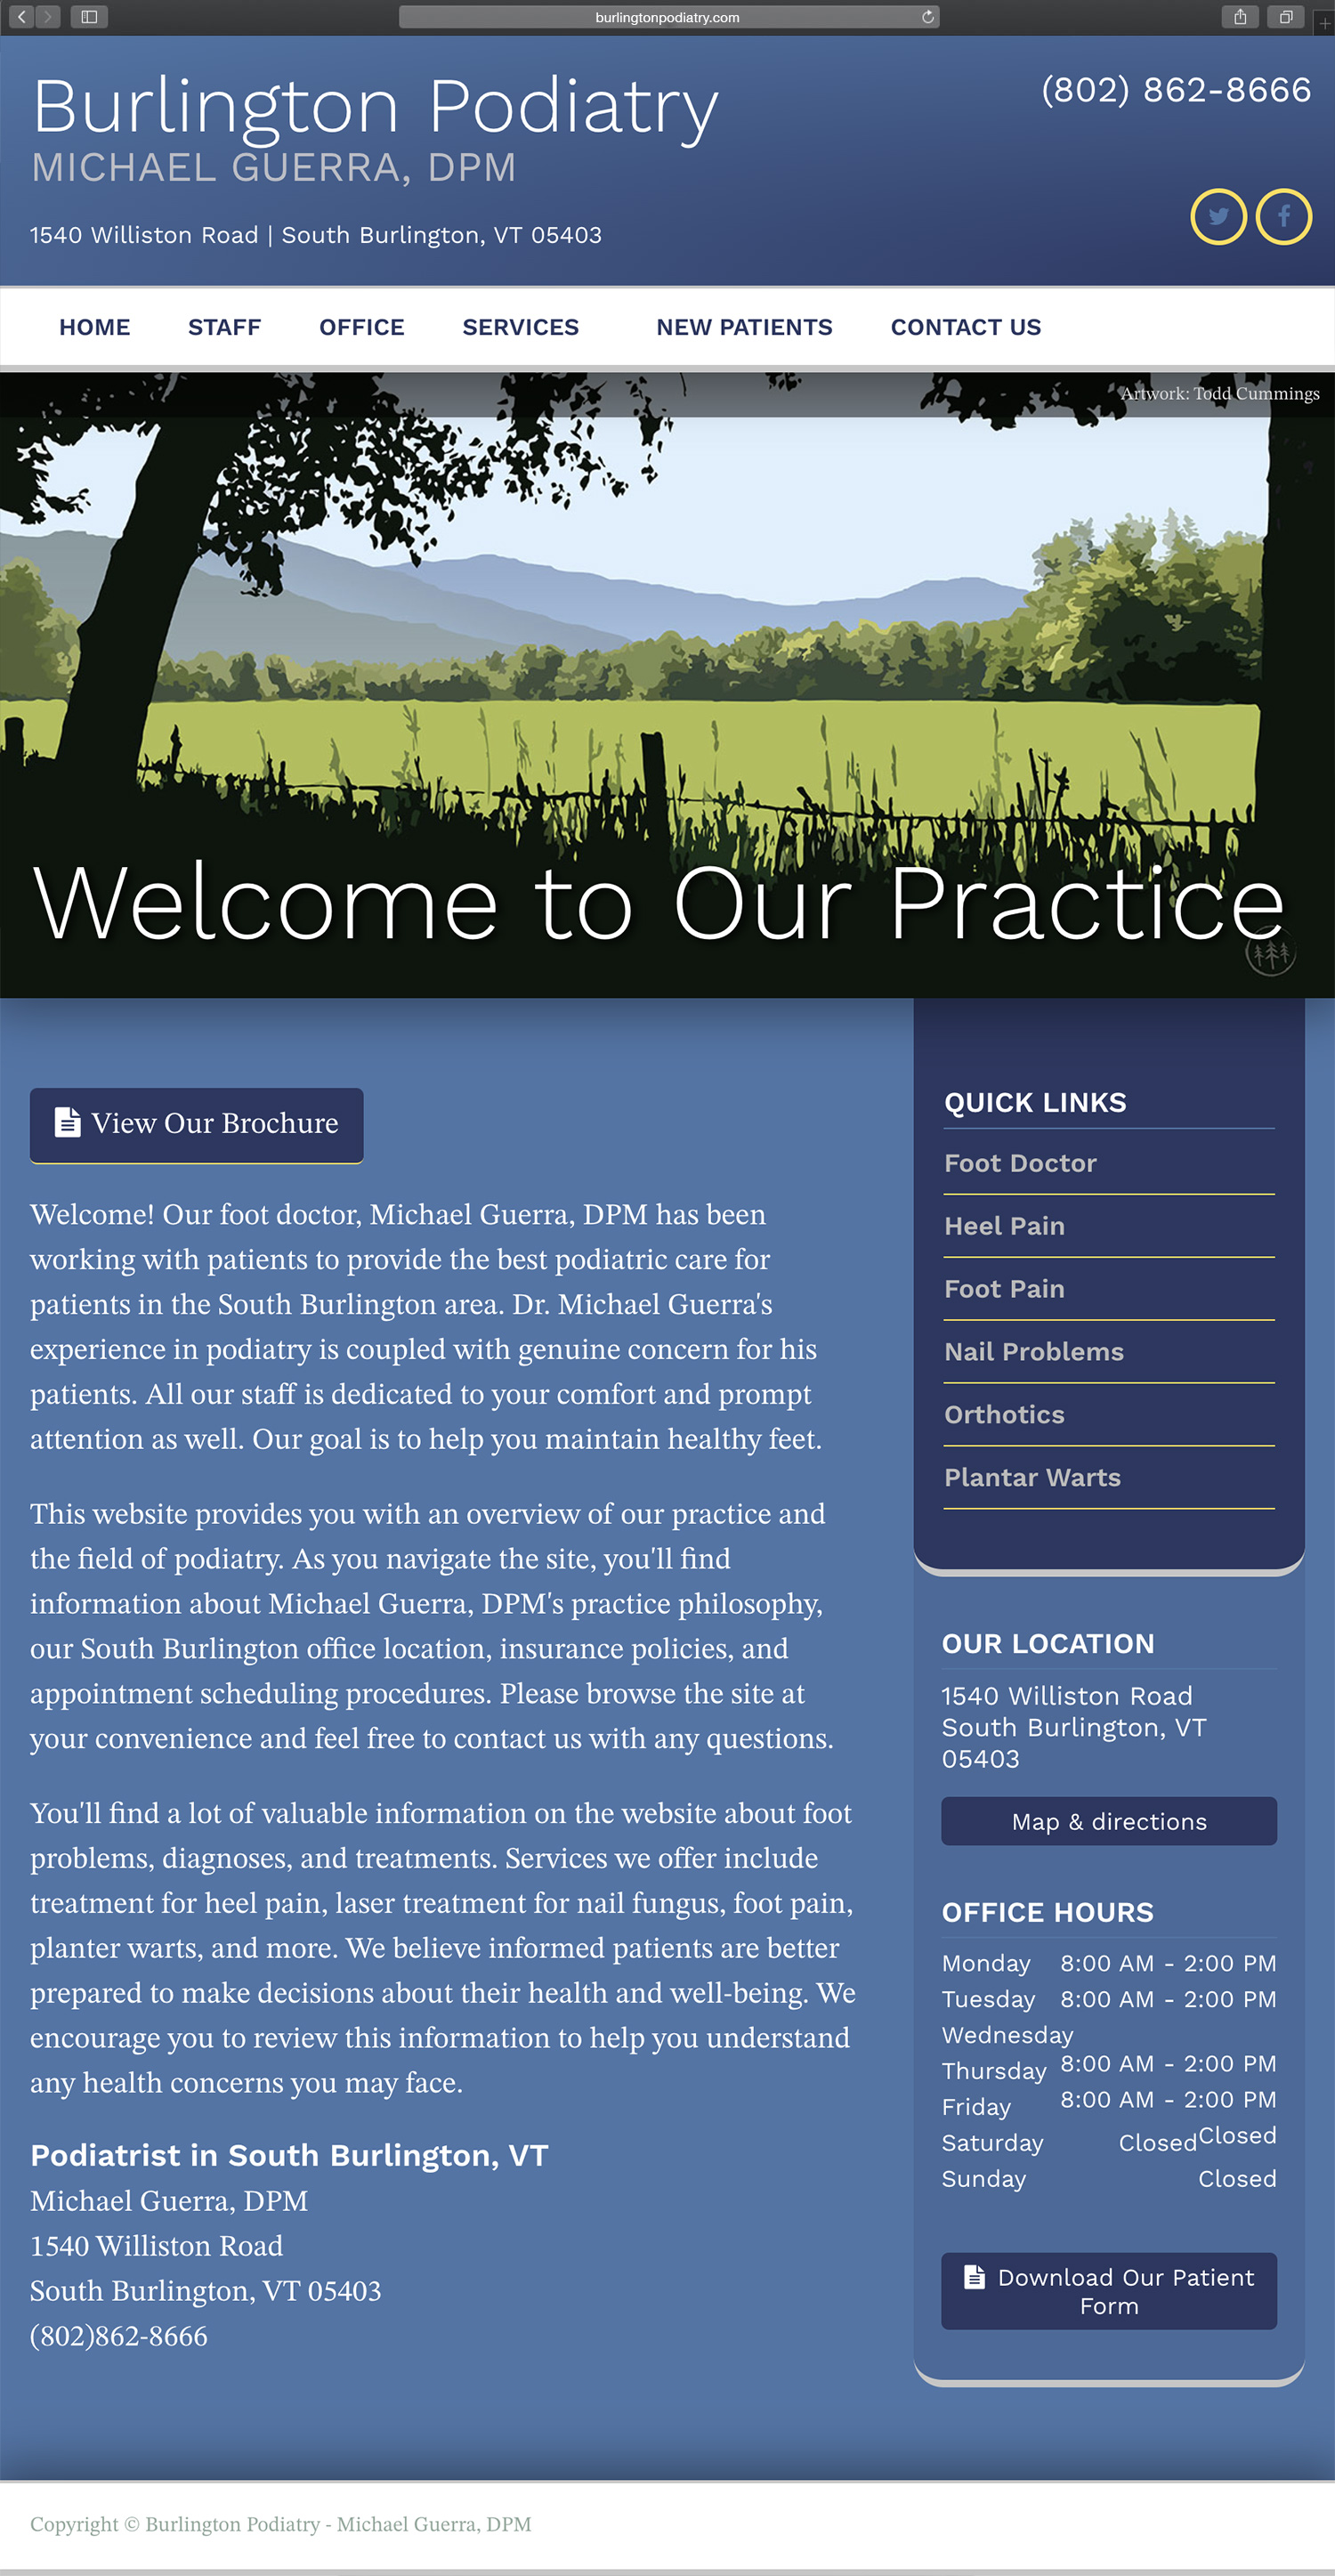 Website design and website development for Burlington Podiatry - homepage view.